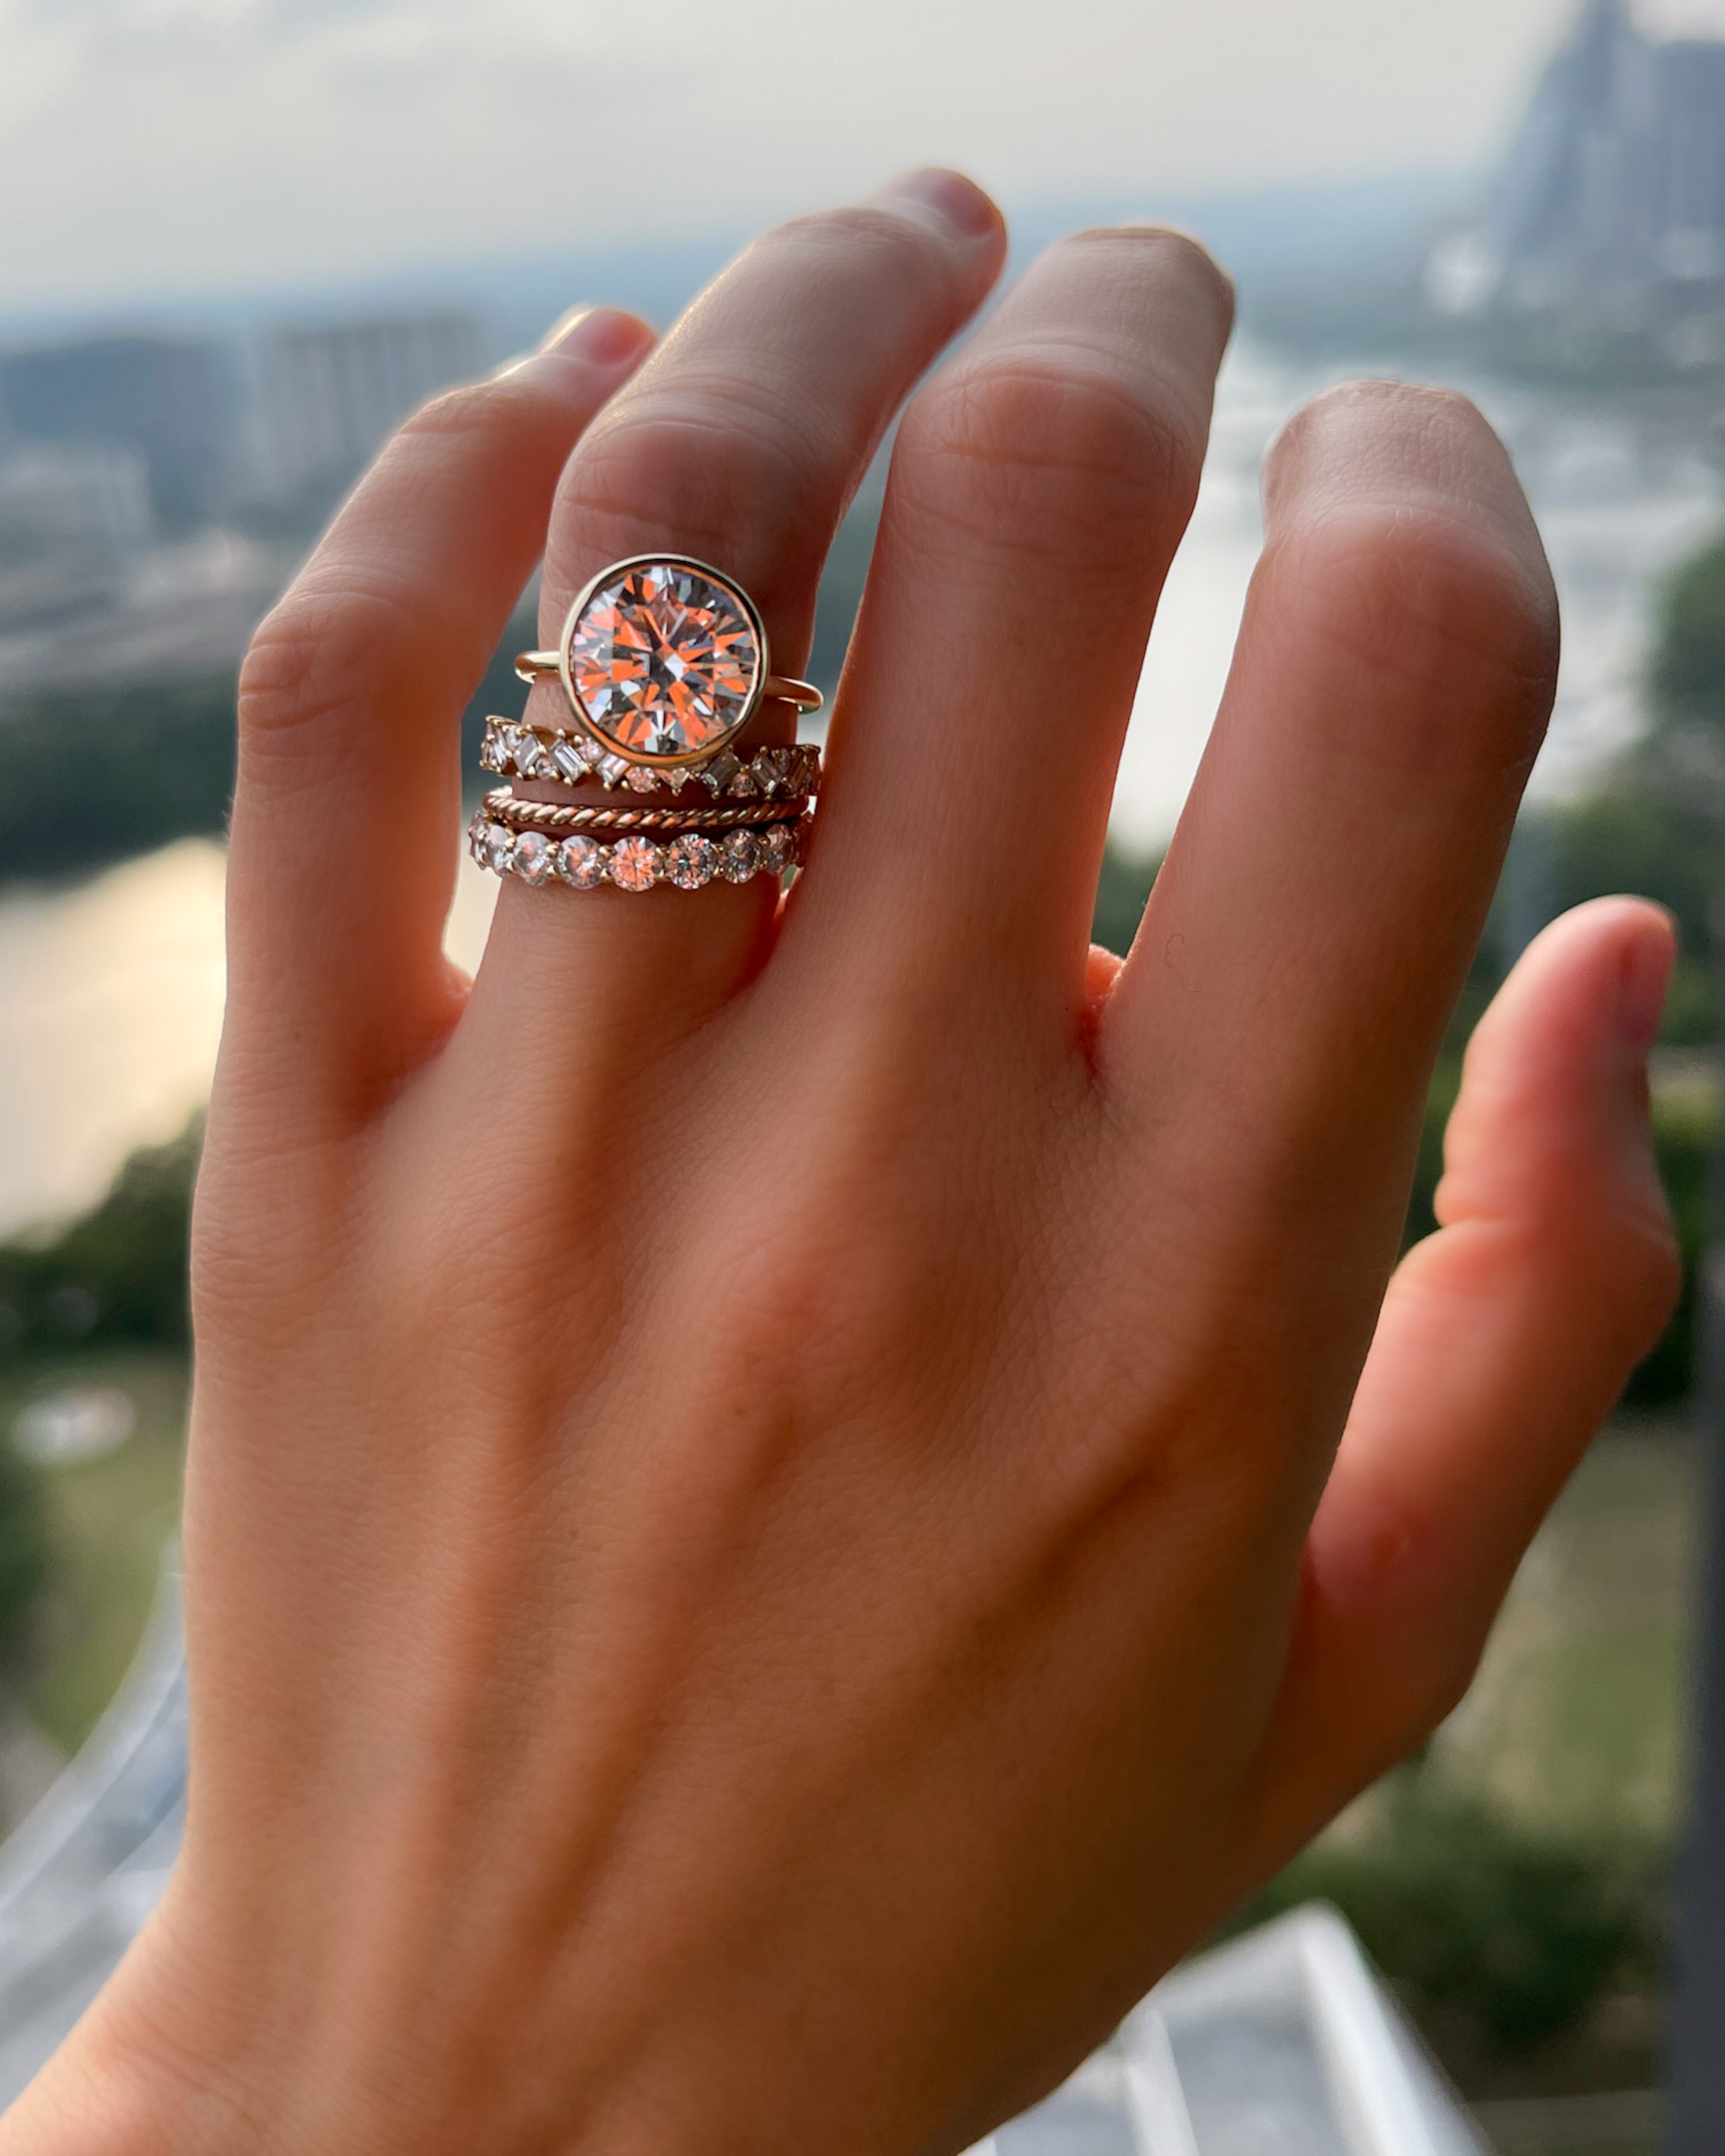 GOODSTONE Penumbra Bezel Set Engagement Ring With Round Cut